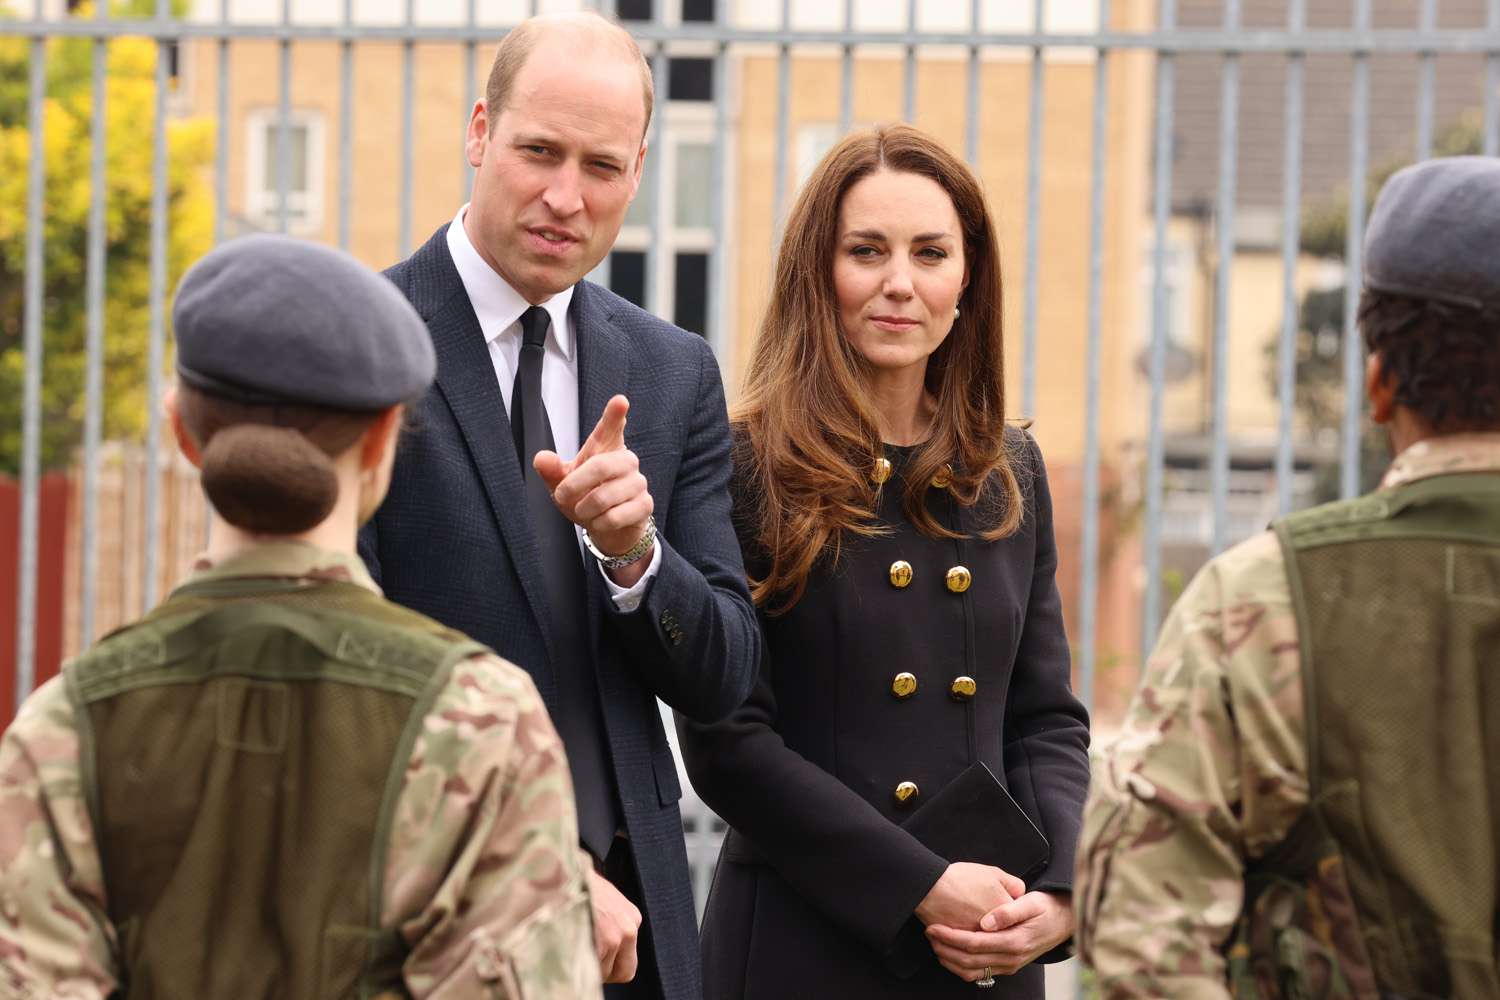 Prince William, Duke of Cambridge, and Britain's Catherine, Duchess of Cambridge